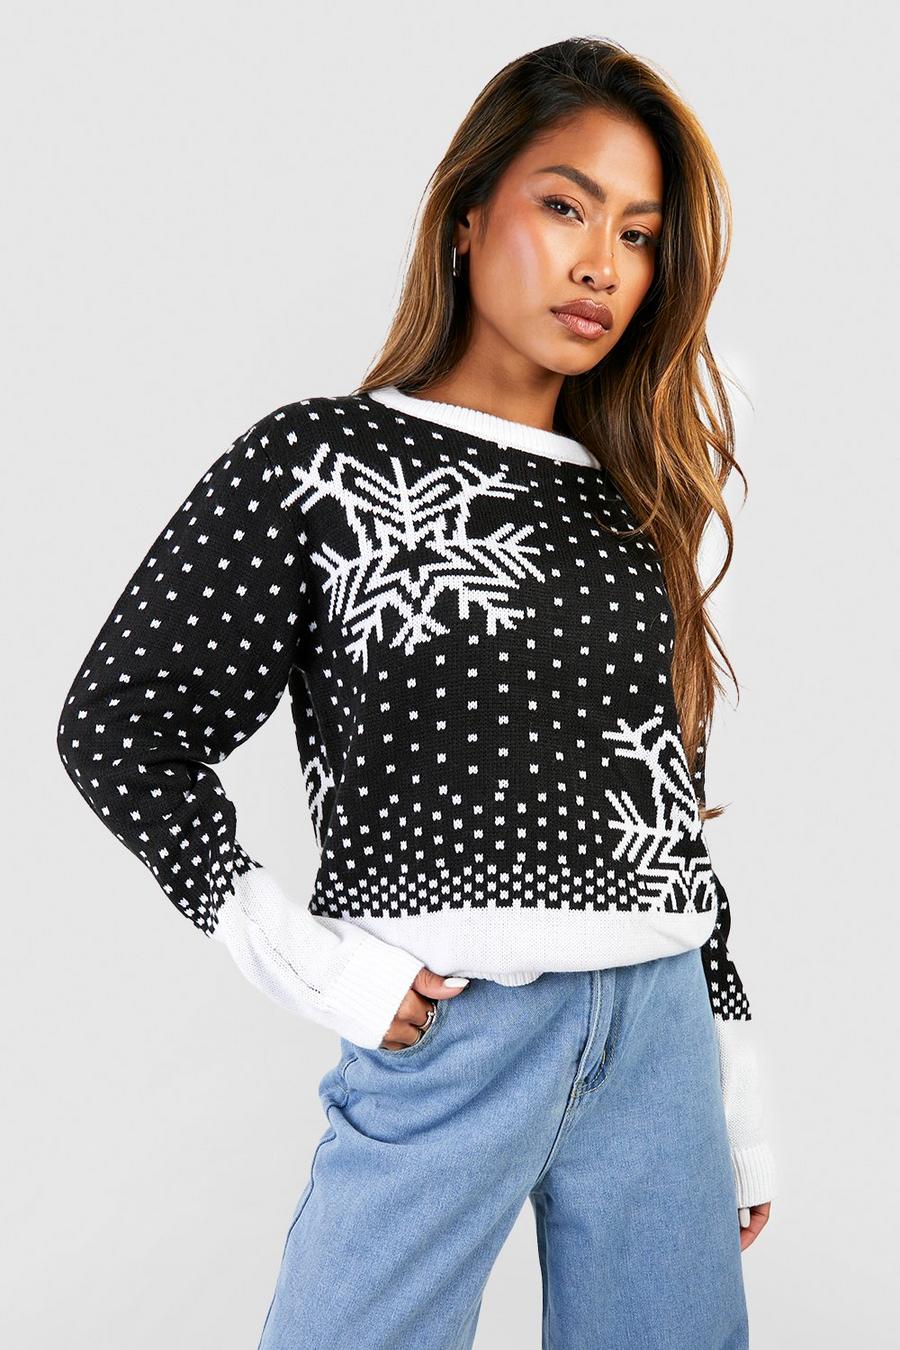 Black Vintage Snowflake And Snow Christmas Sweater